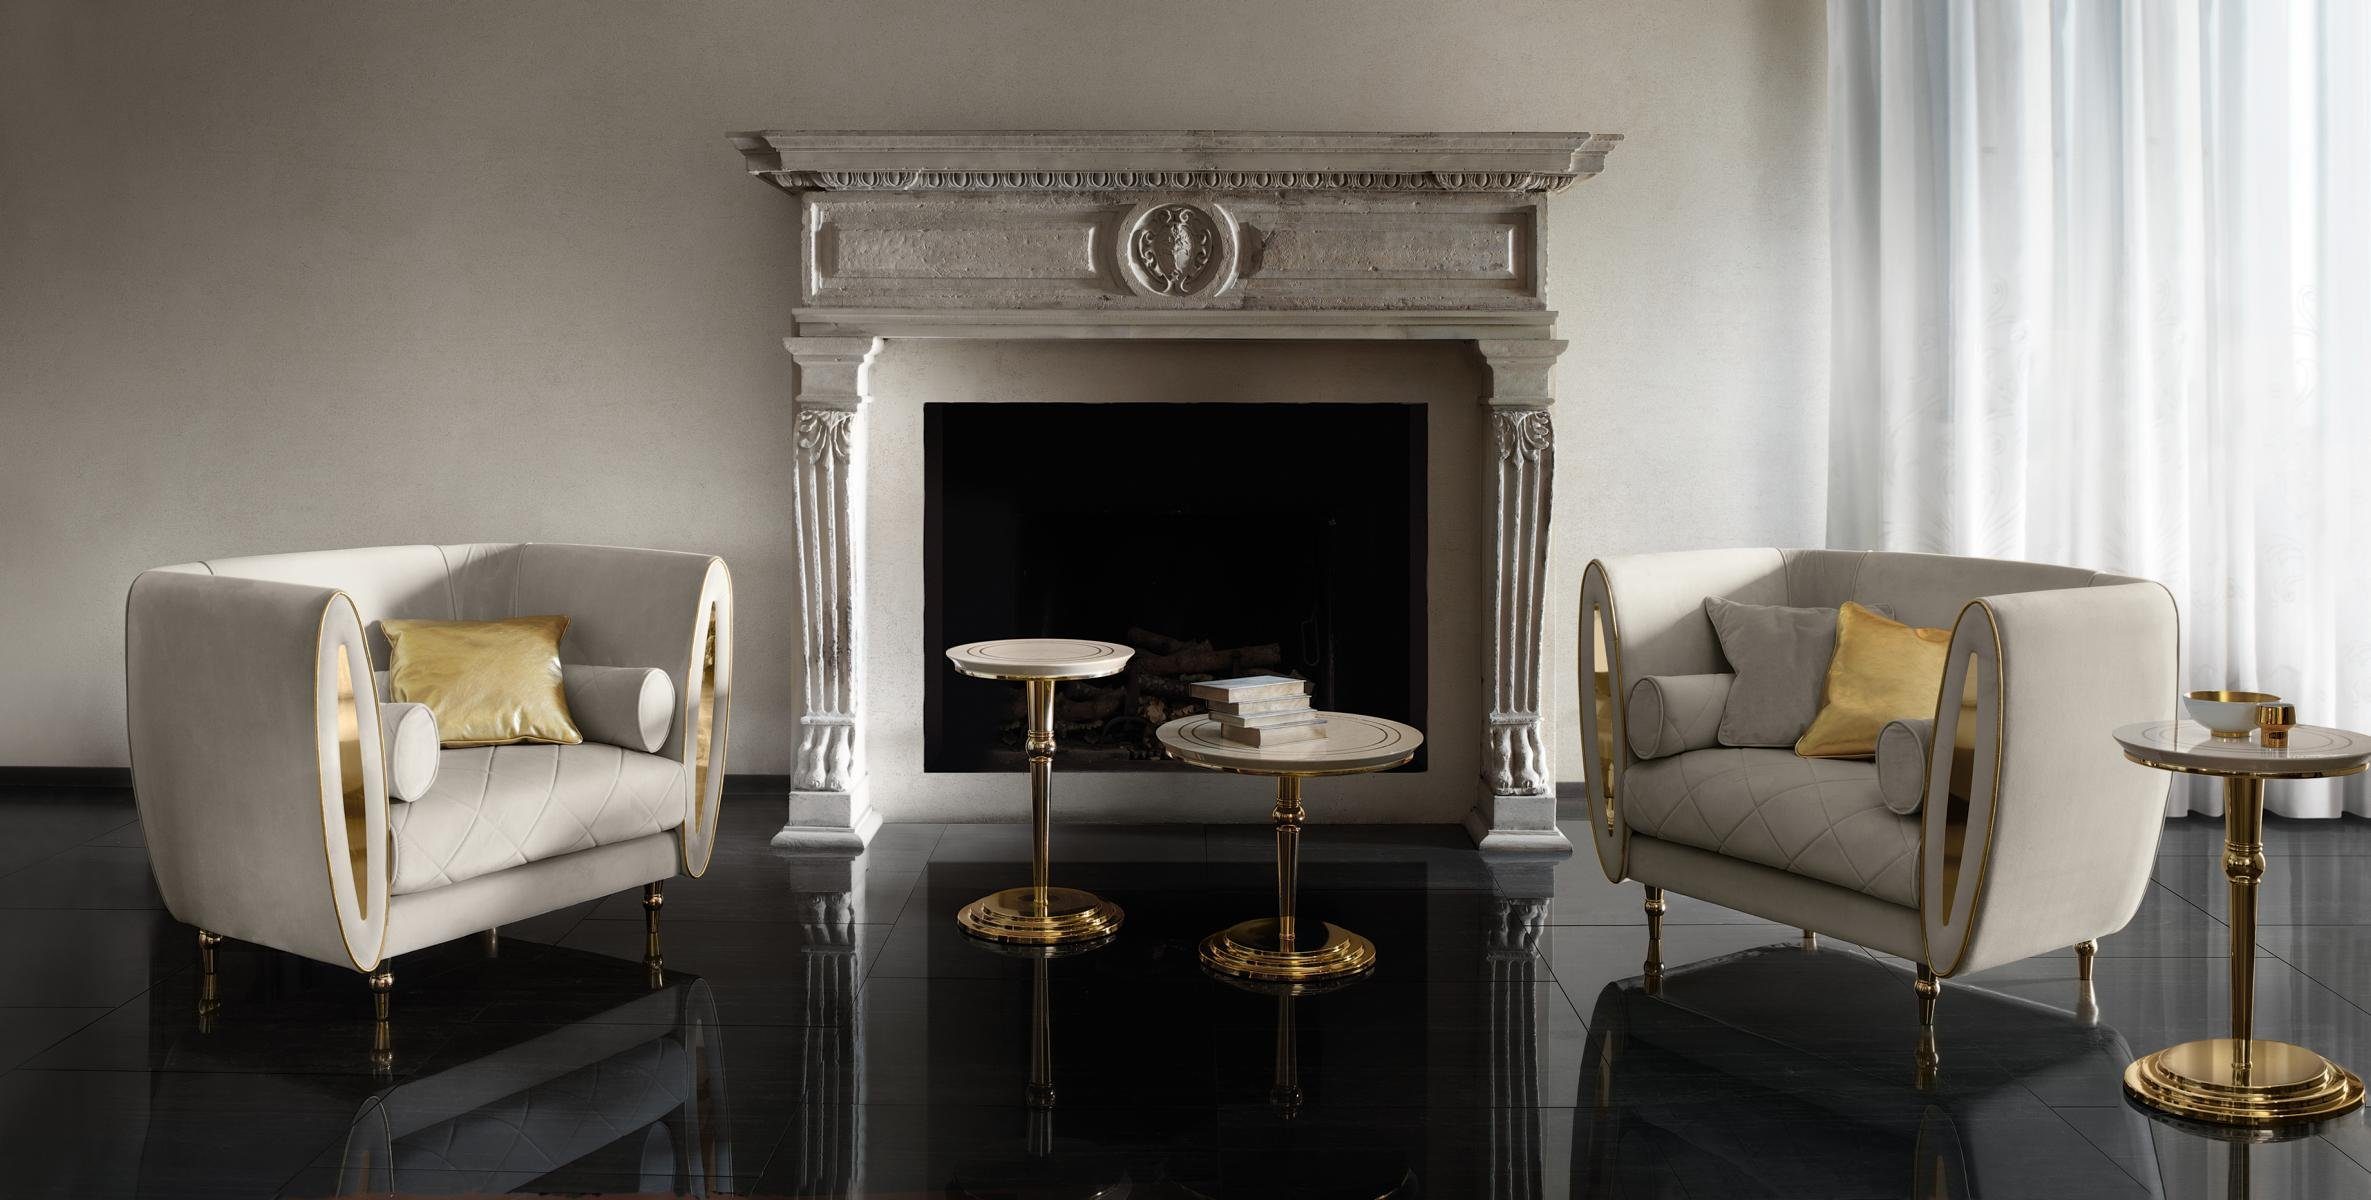 Italienische Klasse Möbel Luxus 3+2 Sofagarnitur Wohnzimmer-Set, JVmoebel